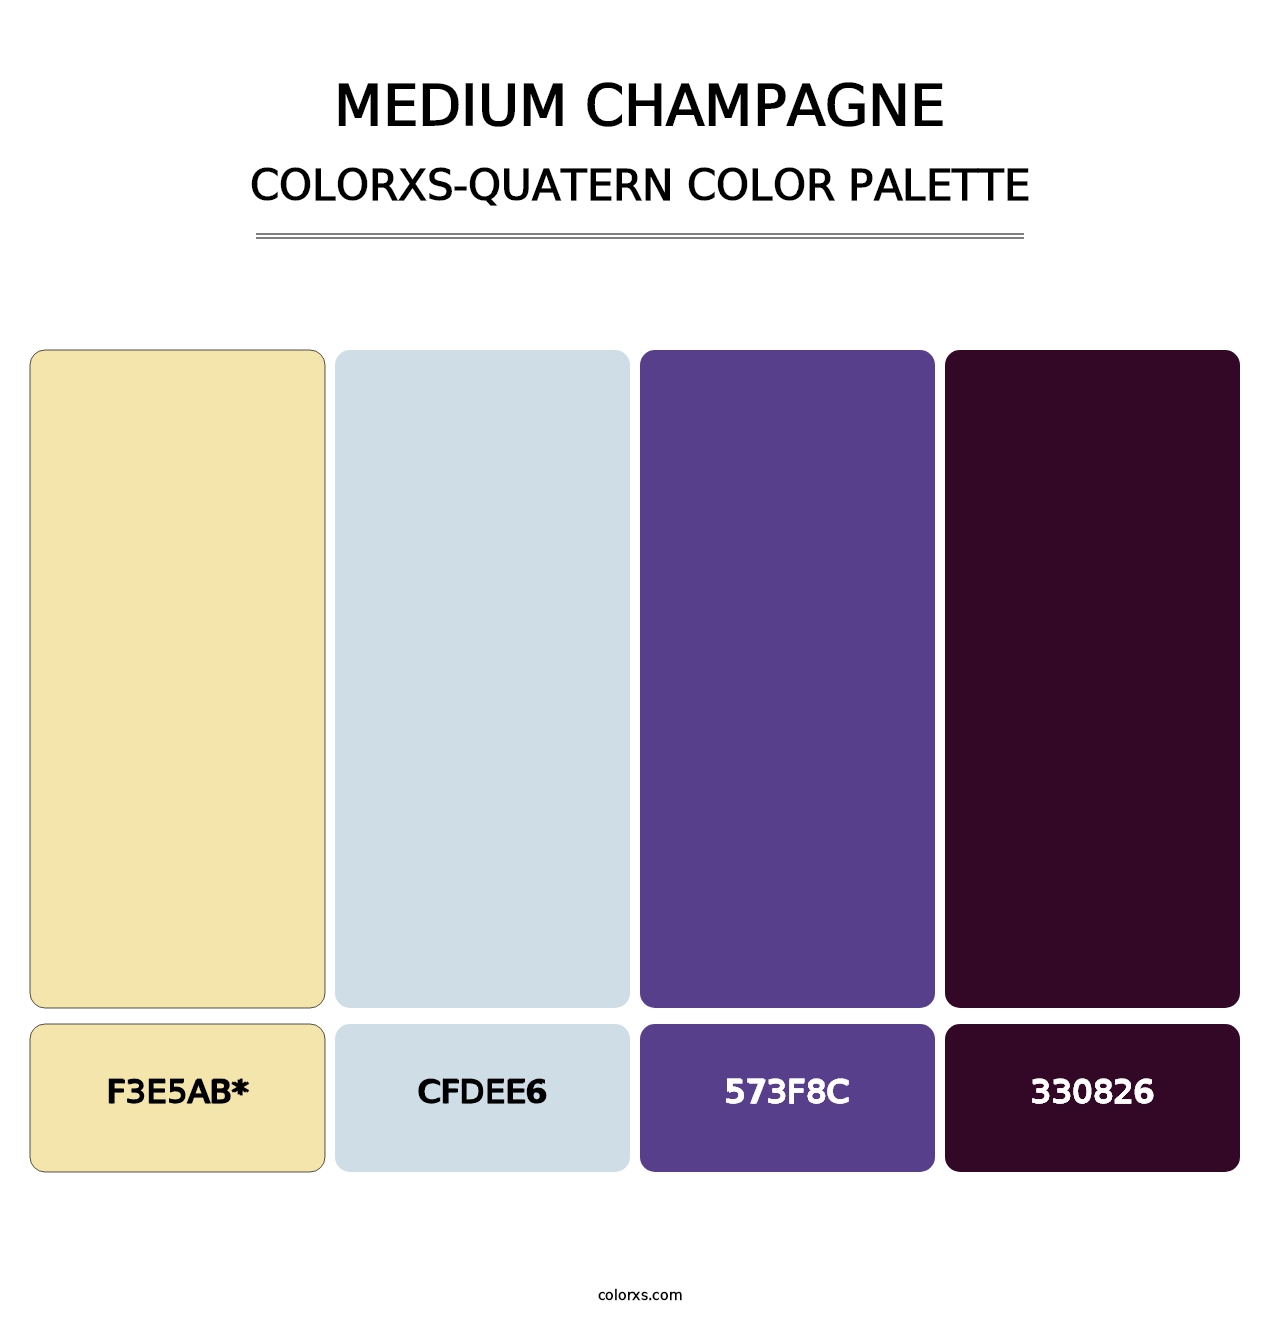 Medium Champagne - Colorxs Quatern Palette